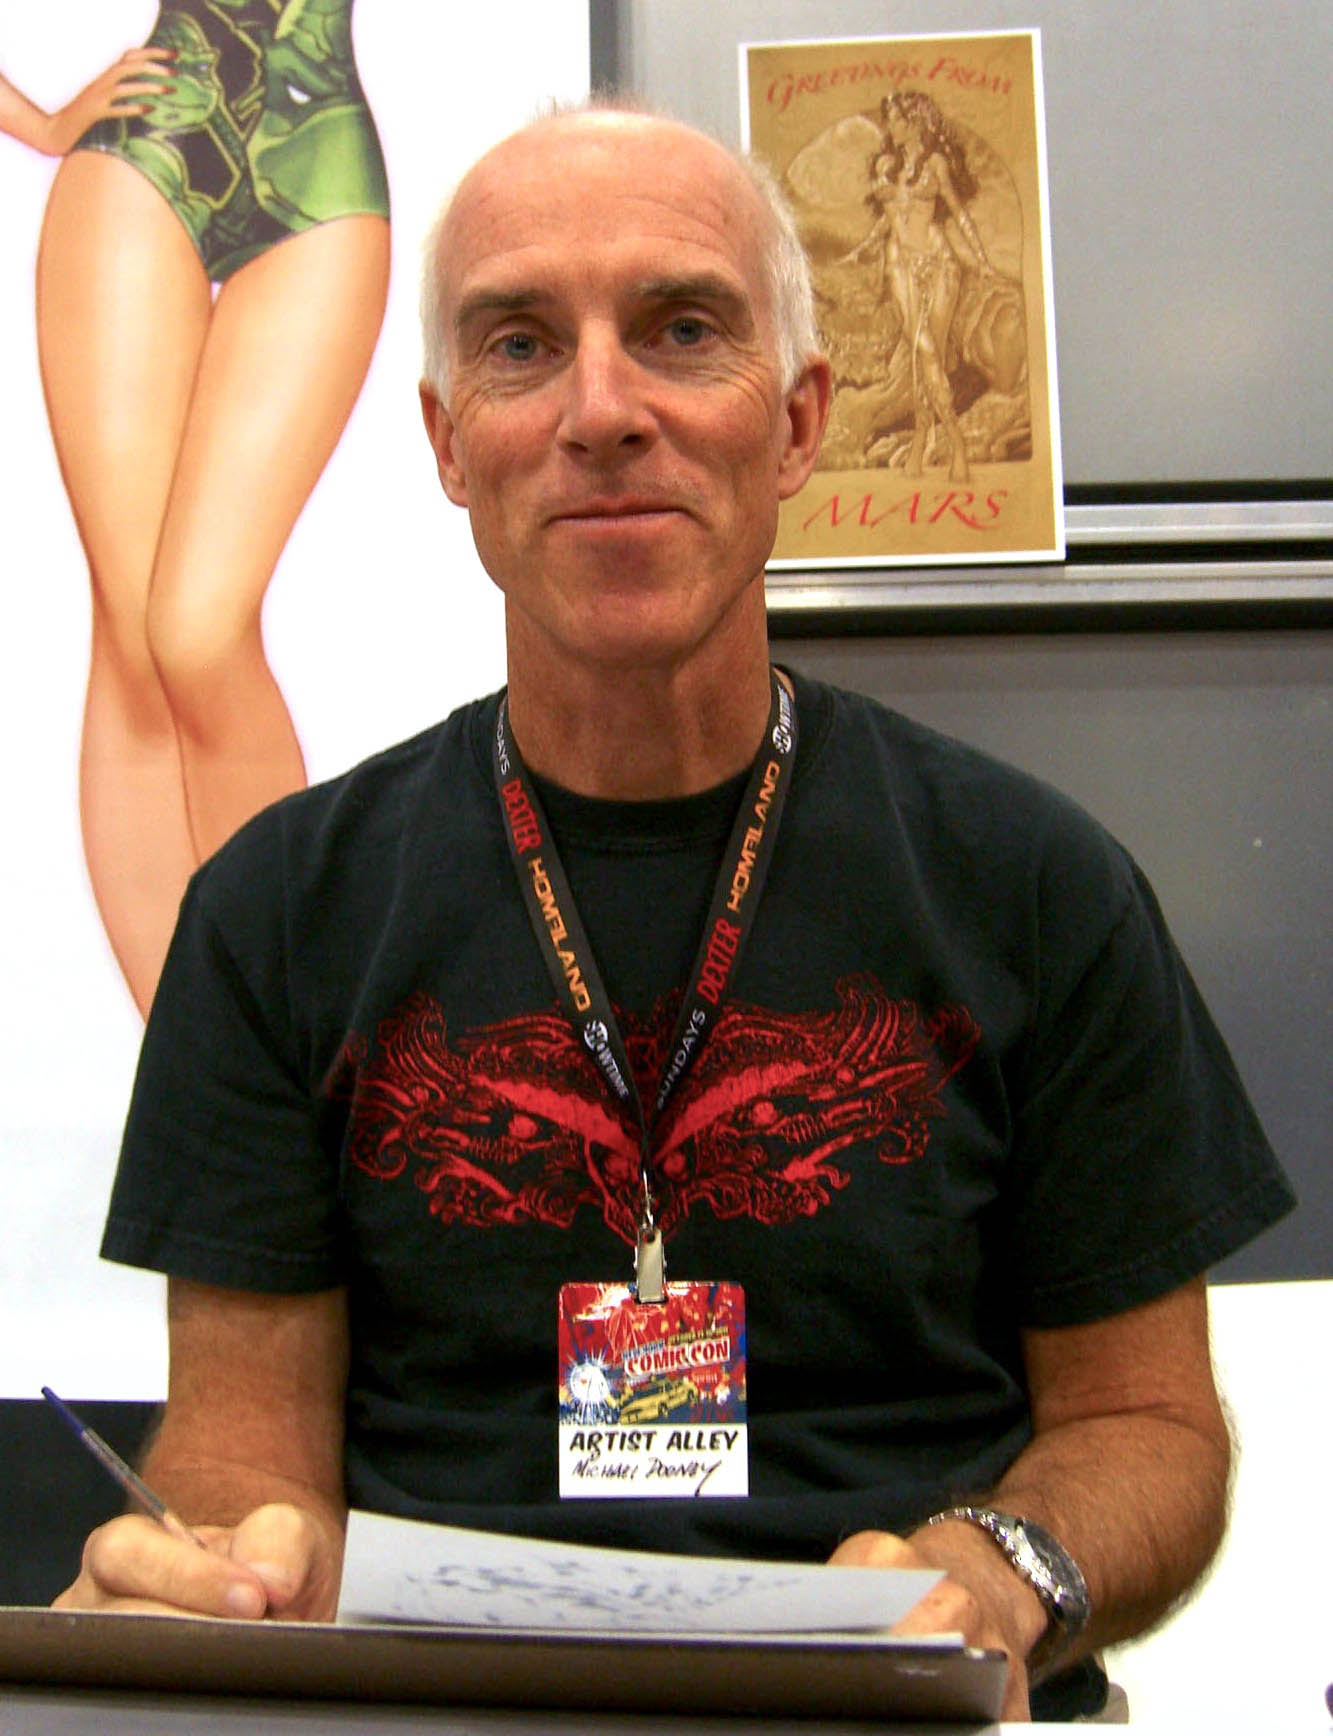 Dooney at the 2011 [[New York Comic Con]].